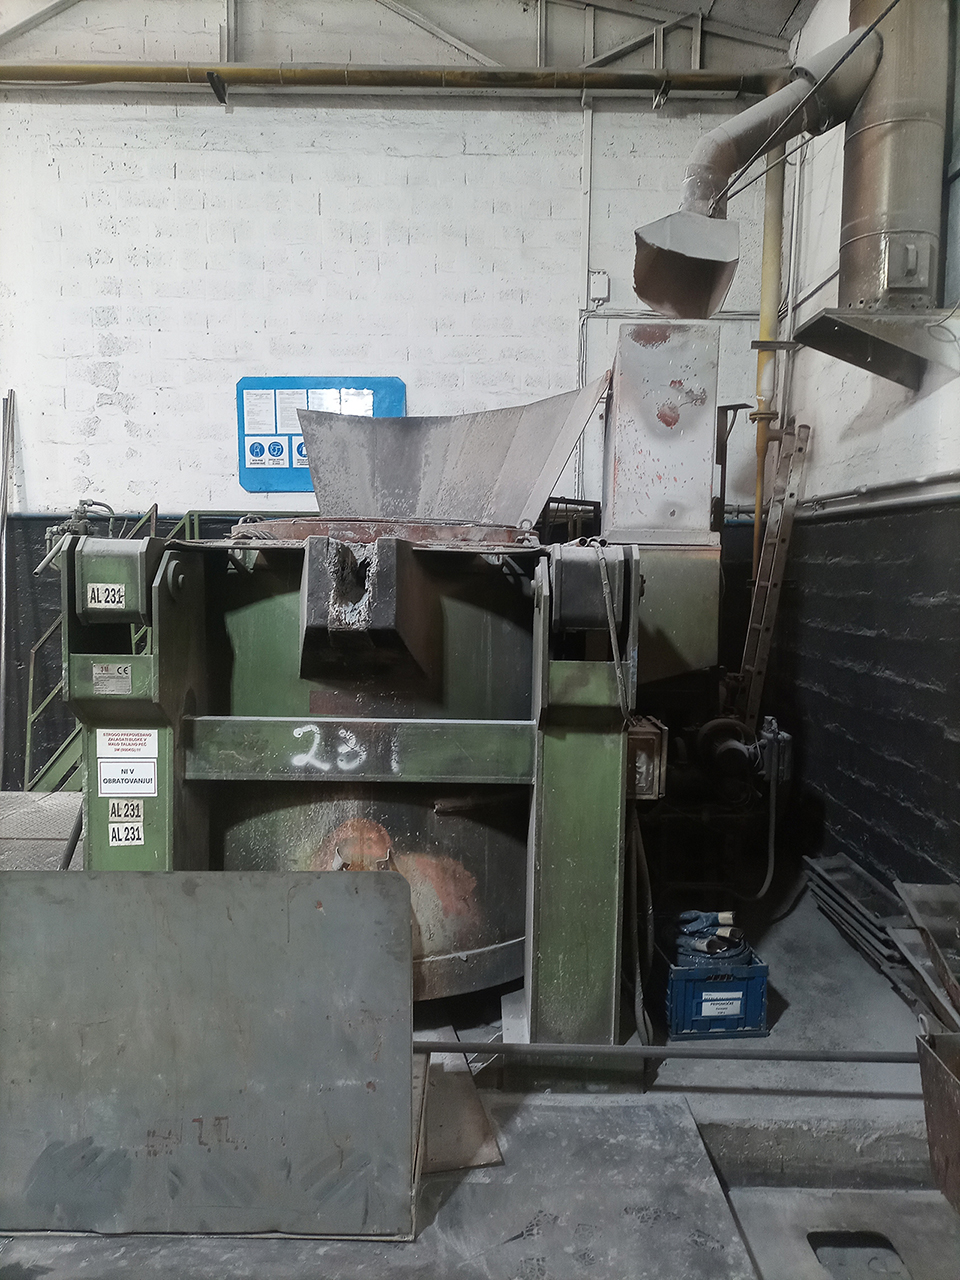 3M Forni Industrial FAC 800 R tilting crucible furnace O1819, used